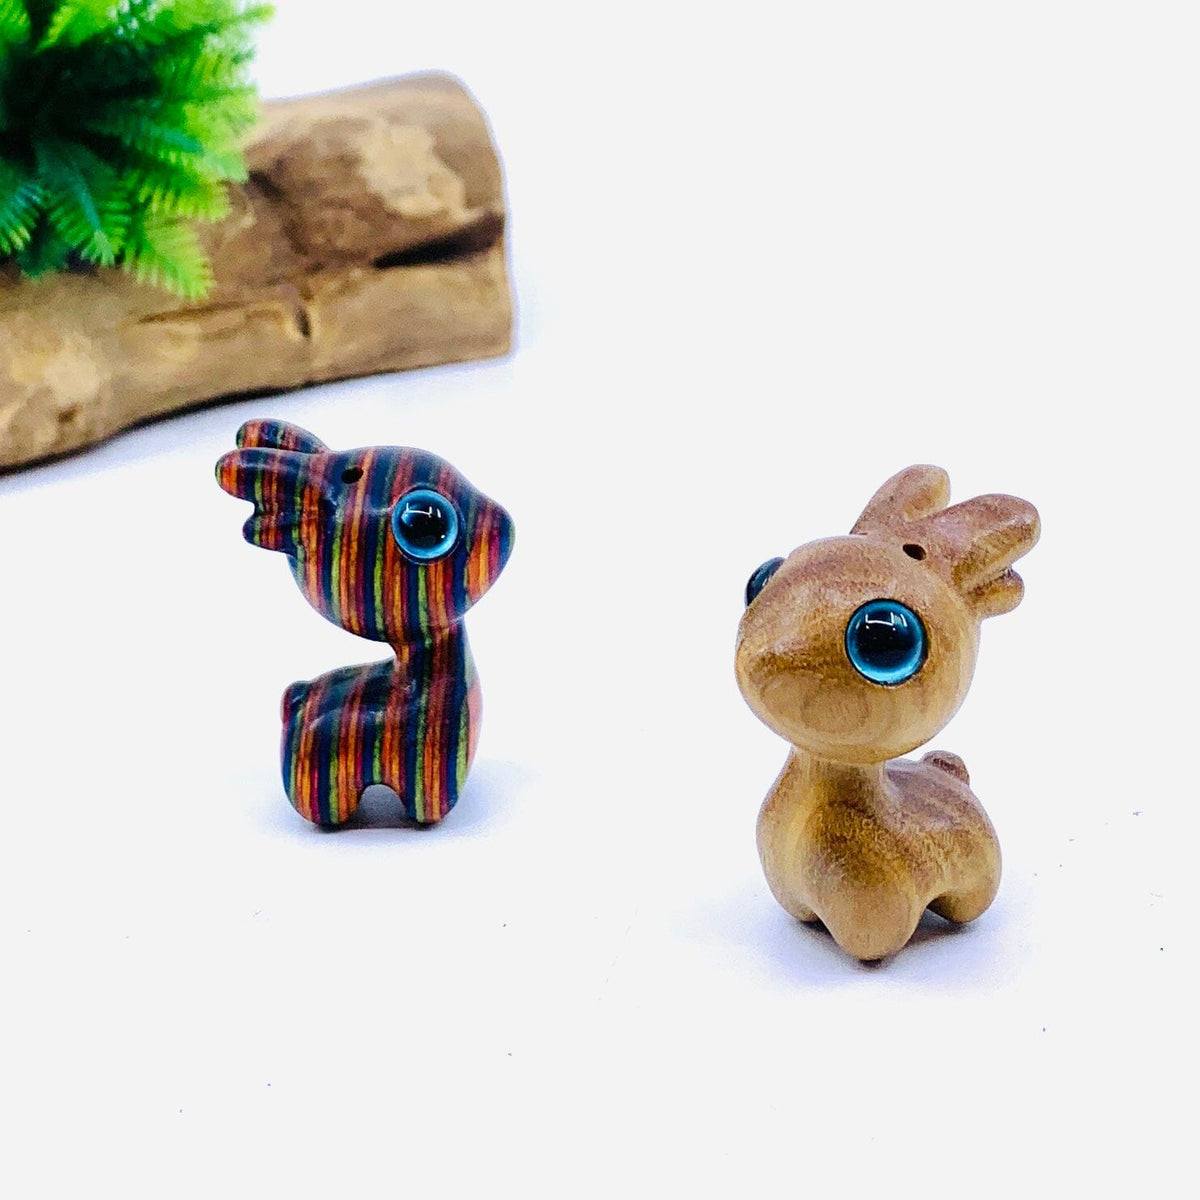 Tiny Wooden Reindeer 211 Miniature - 